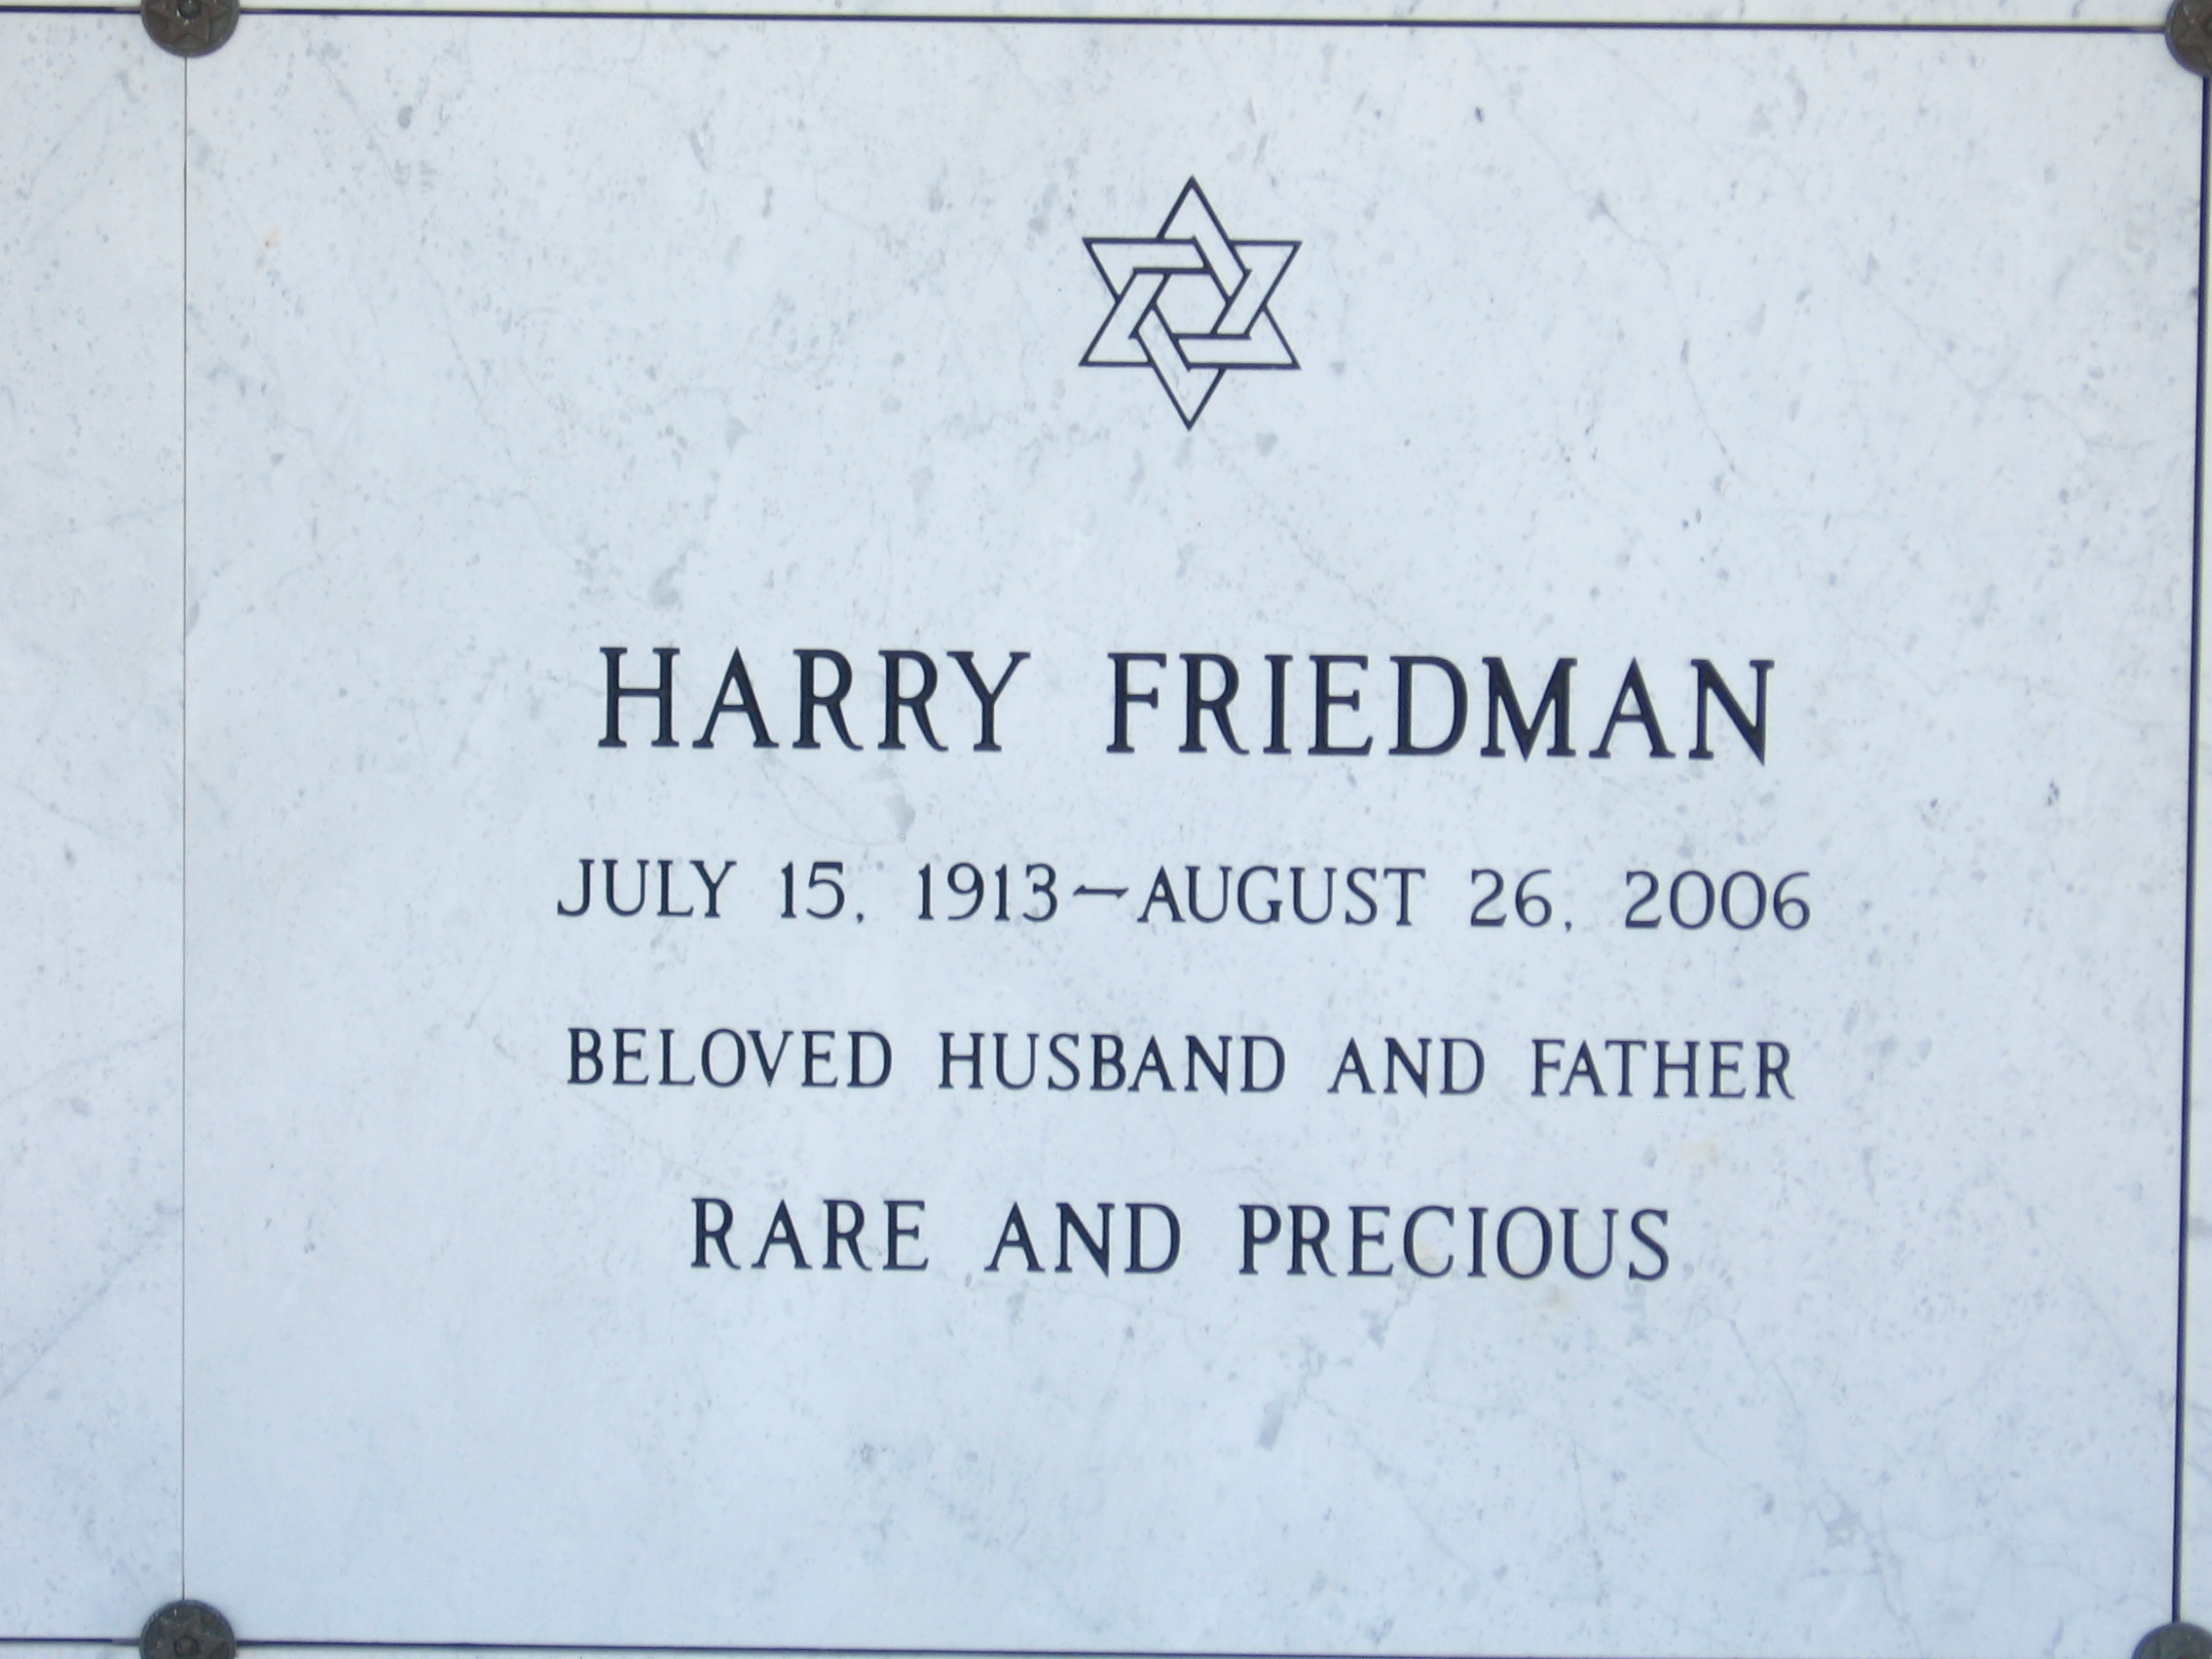 Harry Friedman